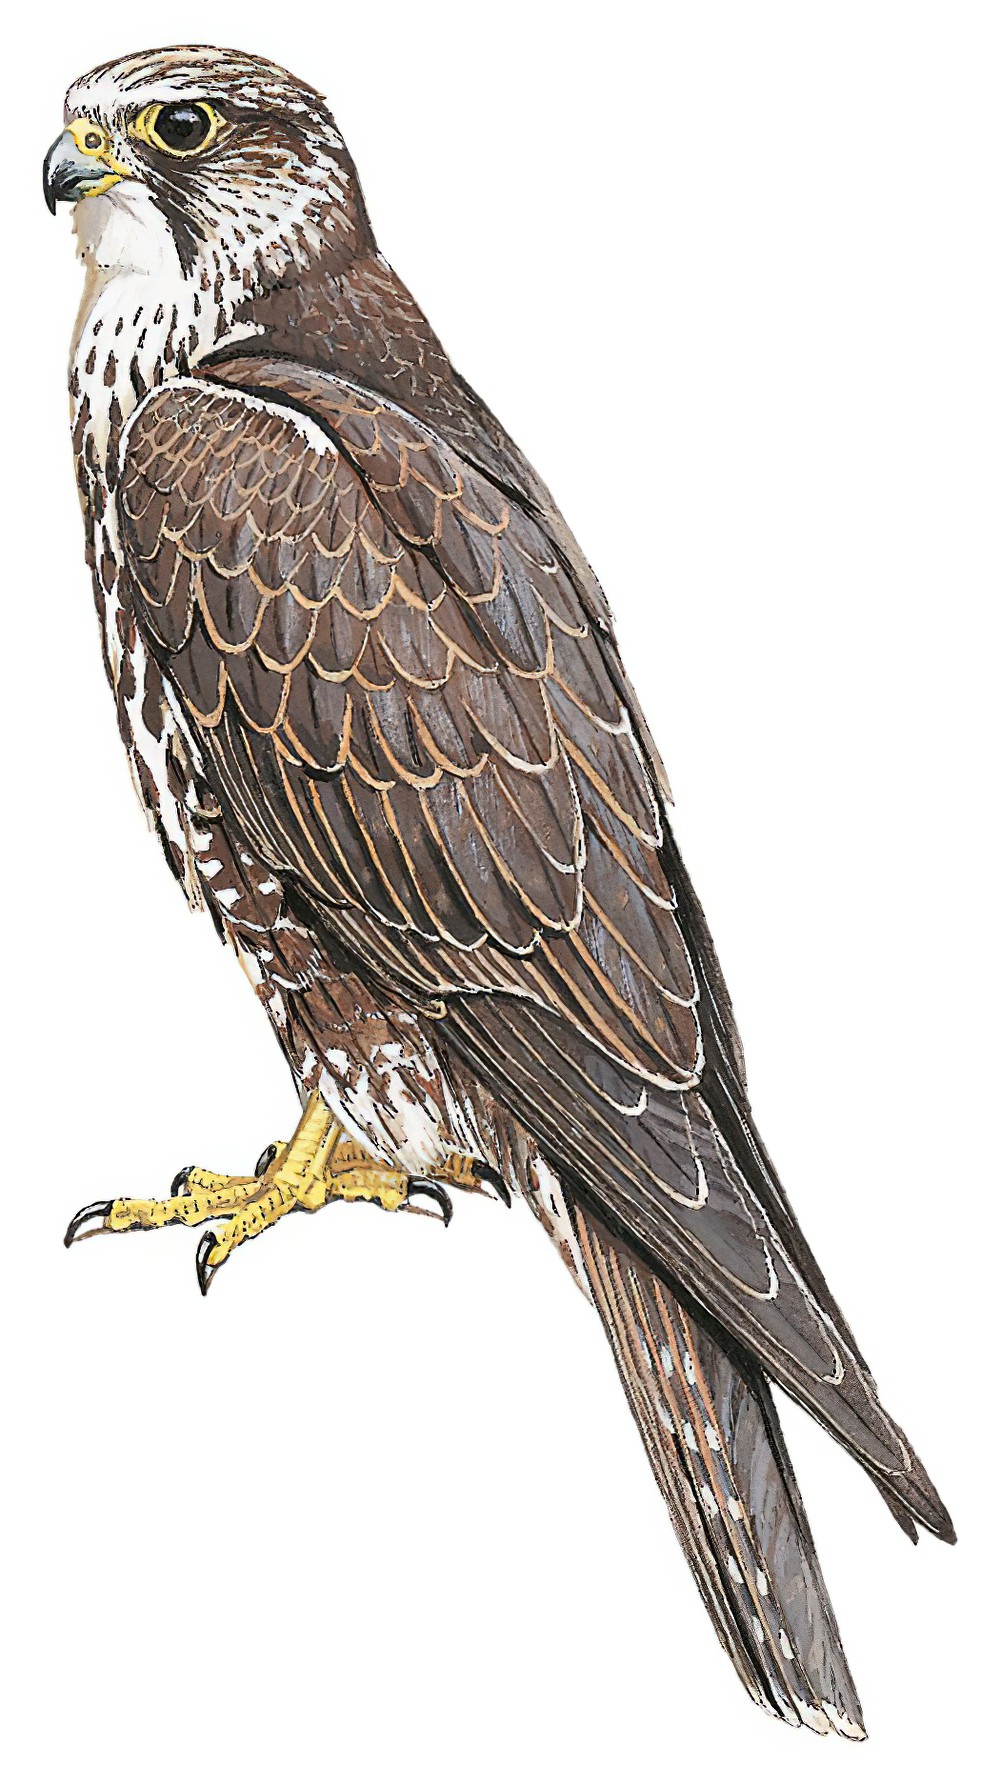 Saker Falcon / Falco cherrug